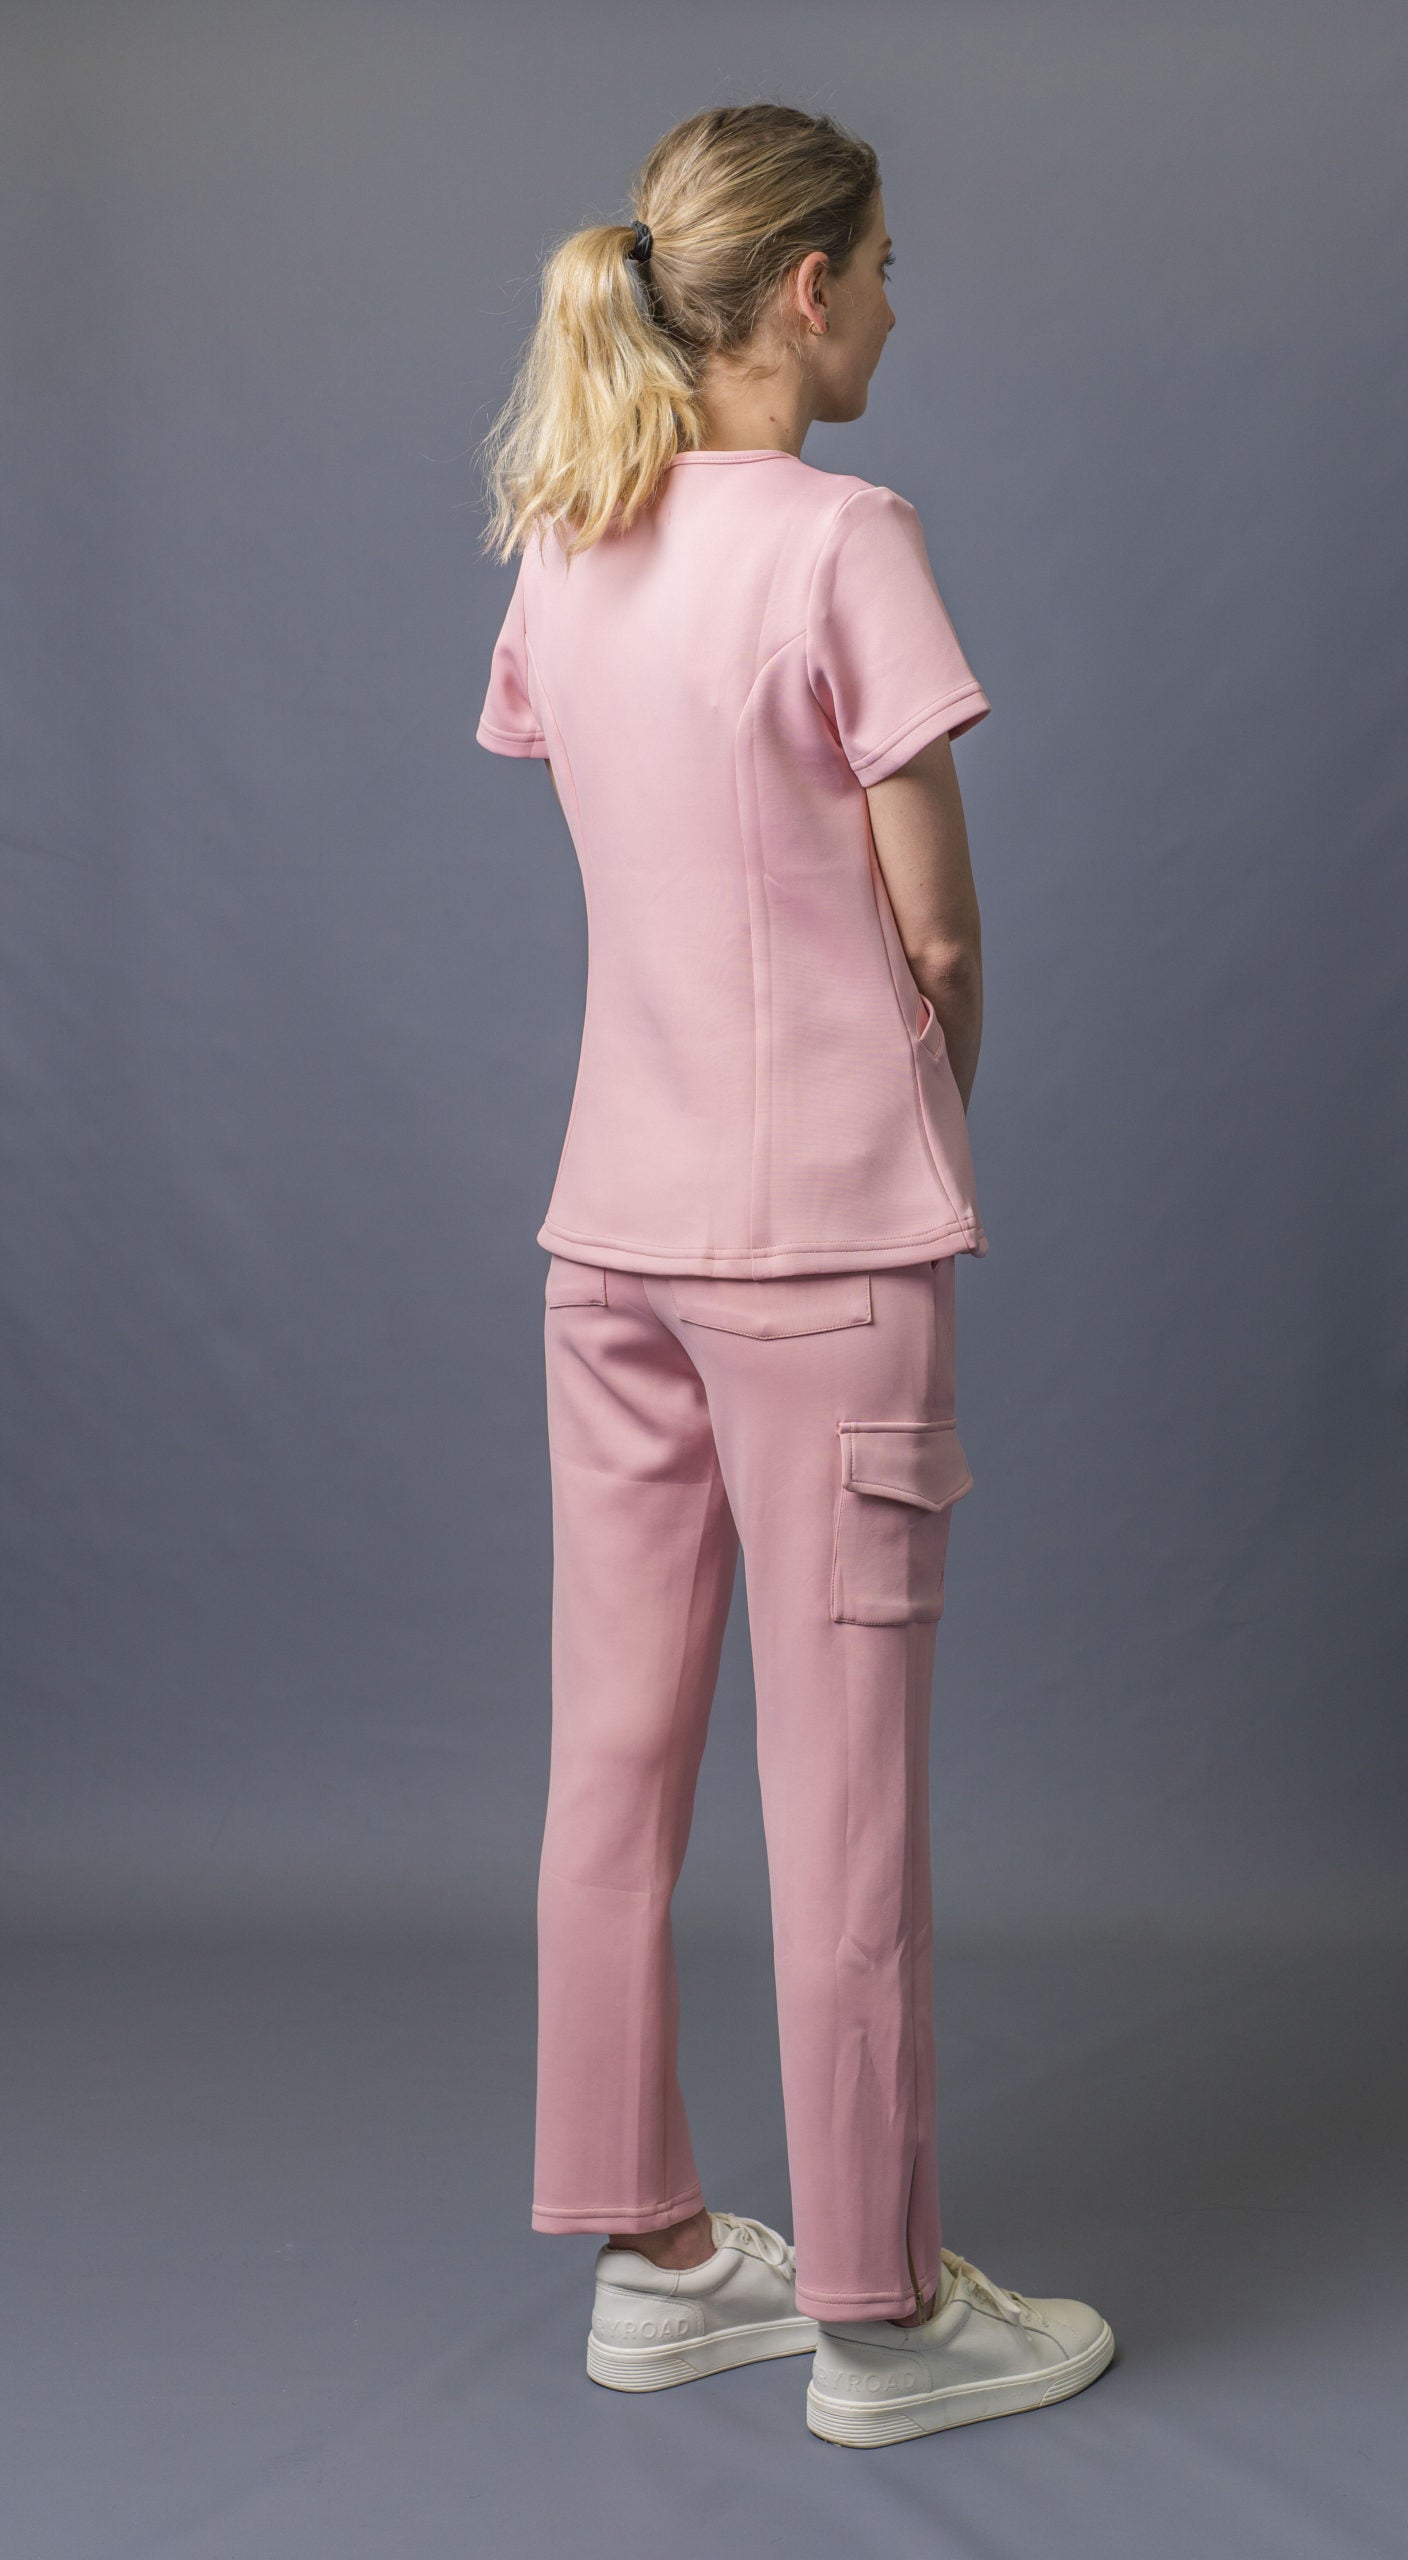 High-quality women's medical scrubs